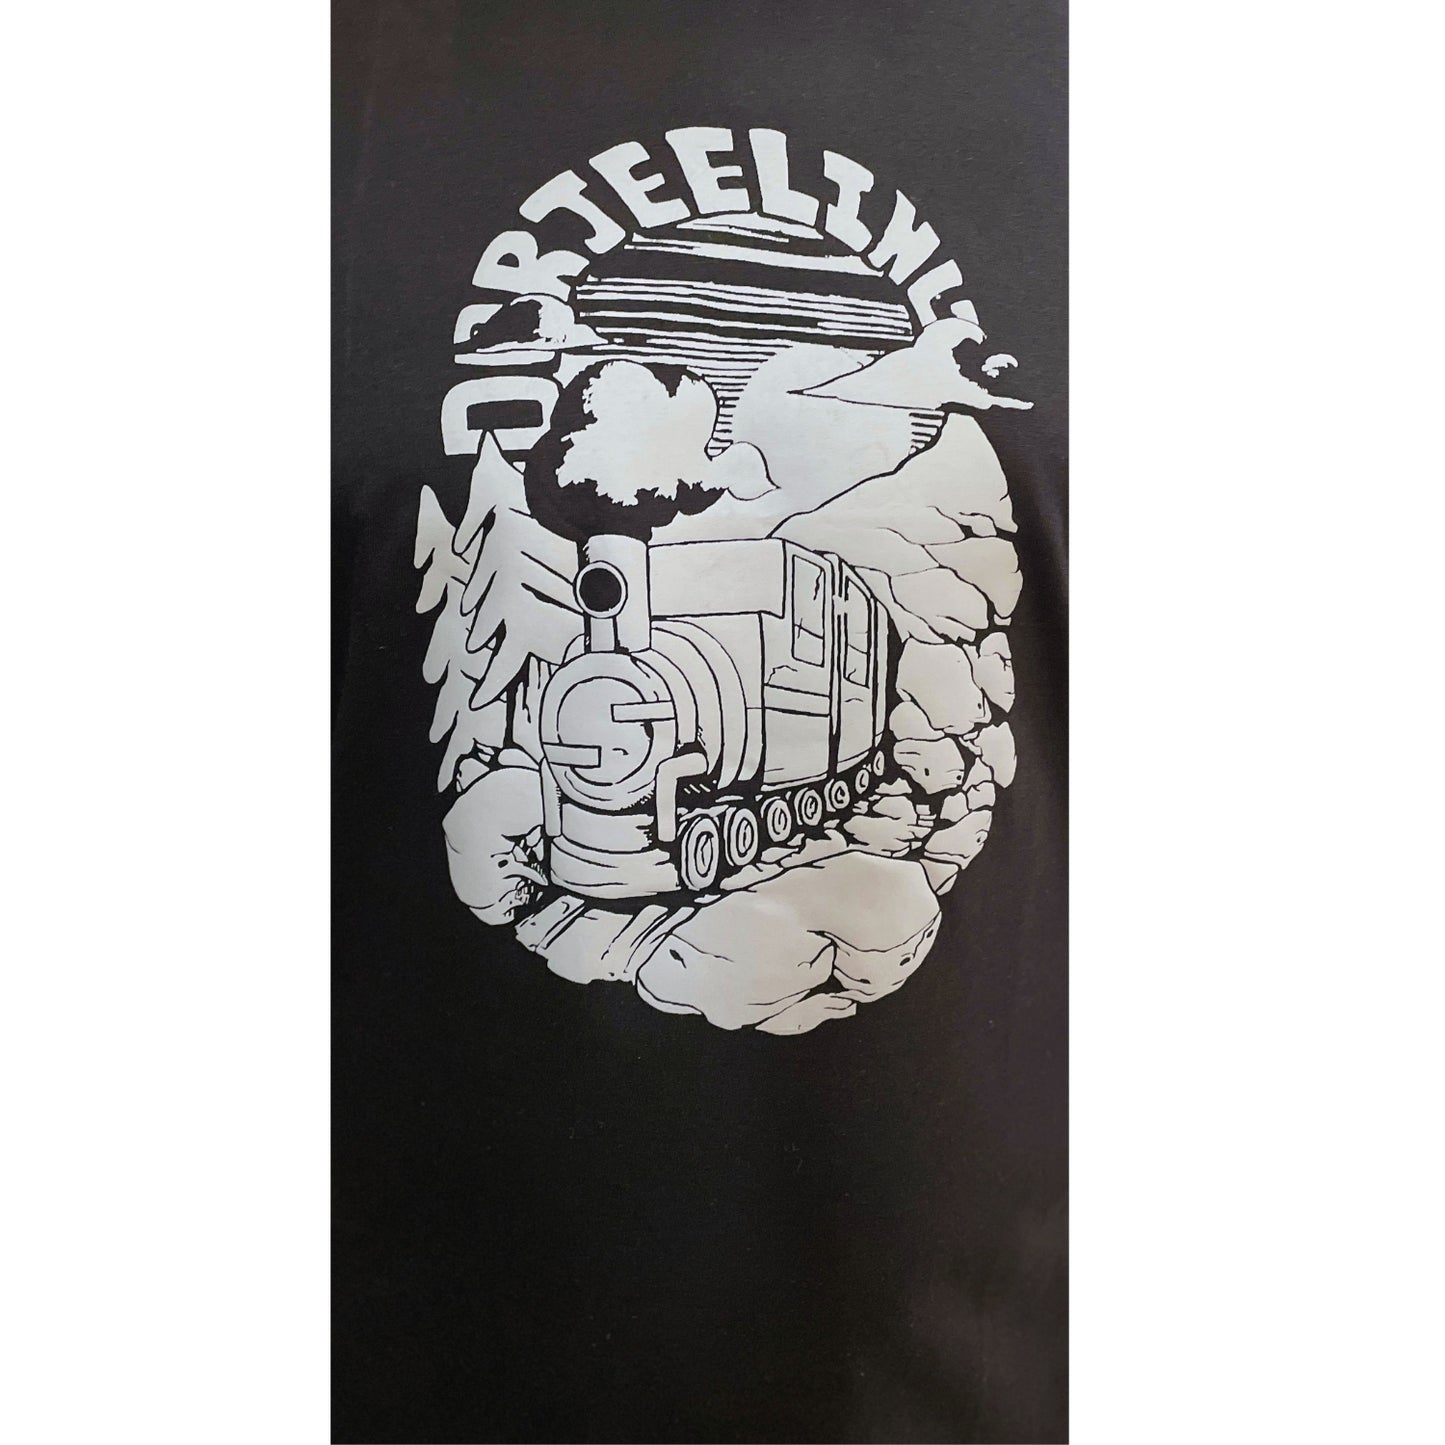 Darjeeling Train - Black - Regular Fit 100% Cotton T-Shirt